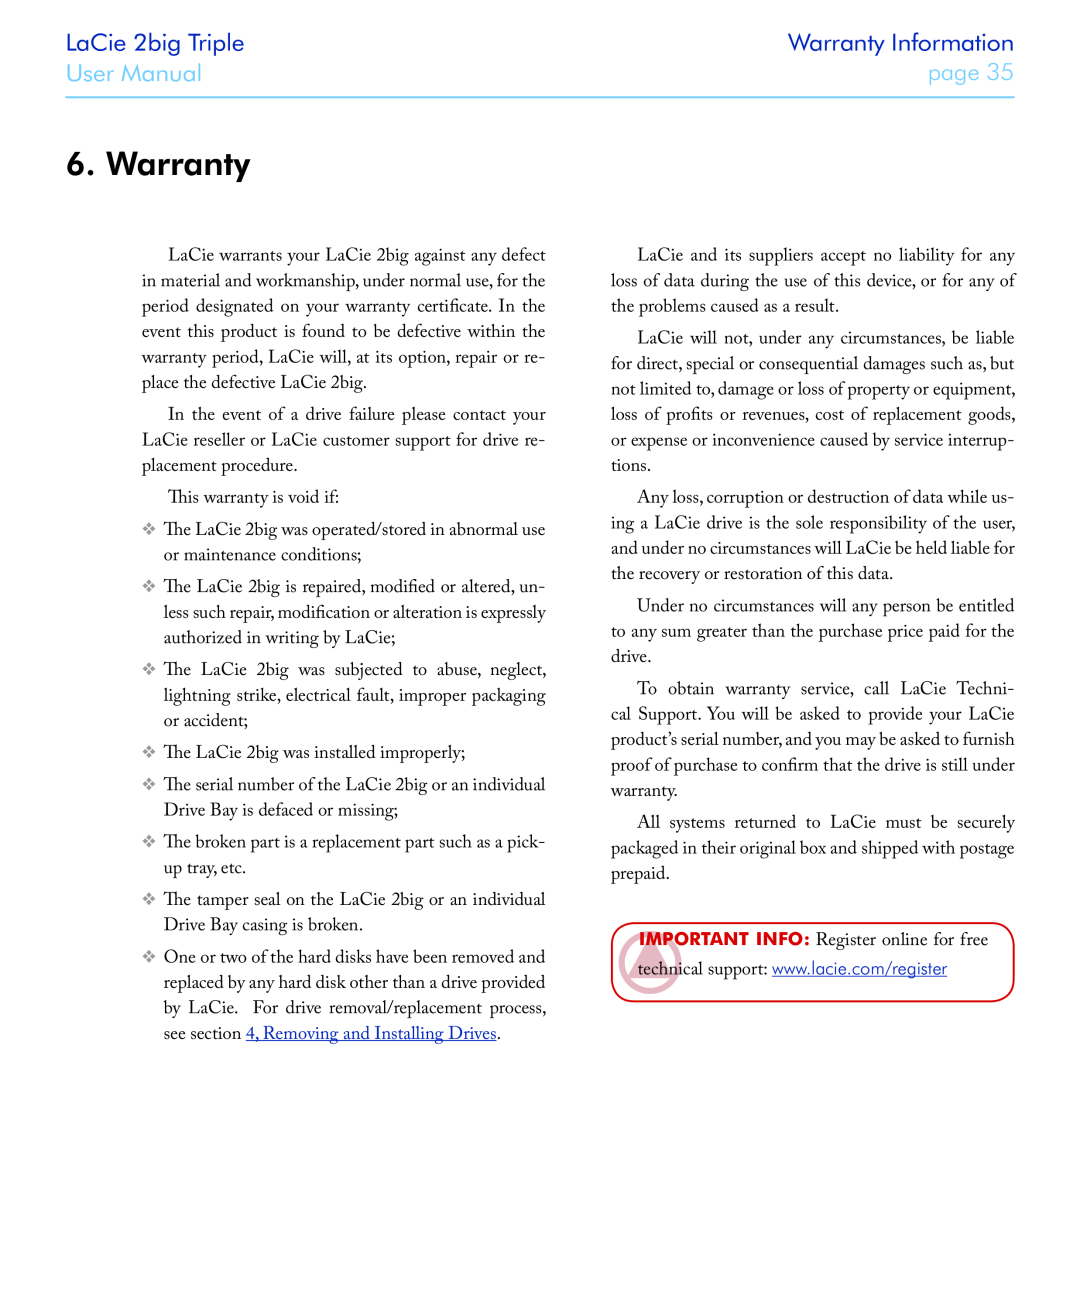 LaCie 2big triple manual Warranty Information, LaCie 2big Triple, User Manual, page 